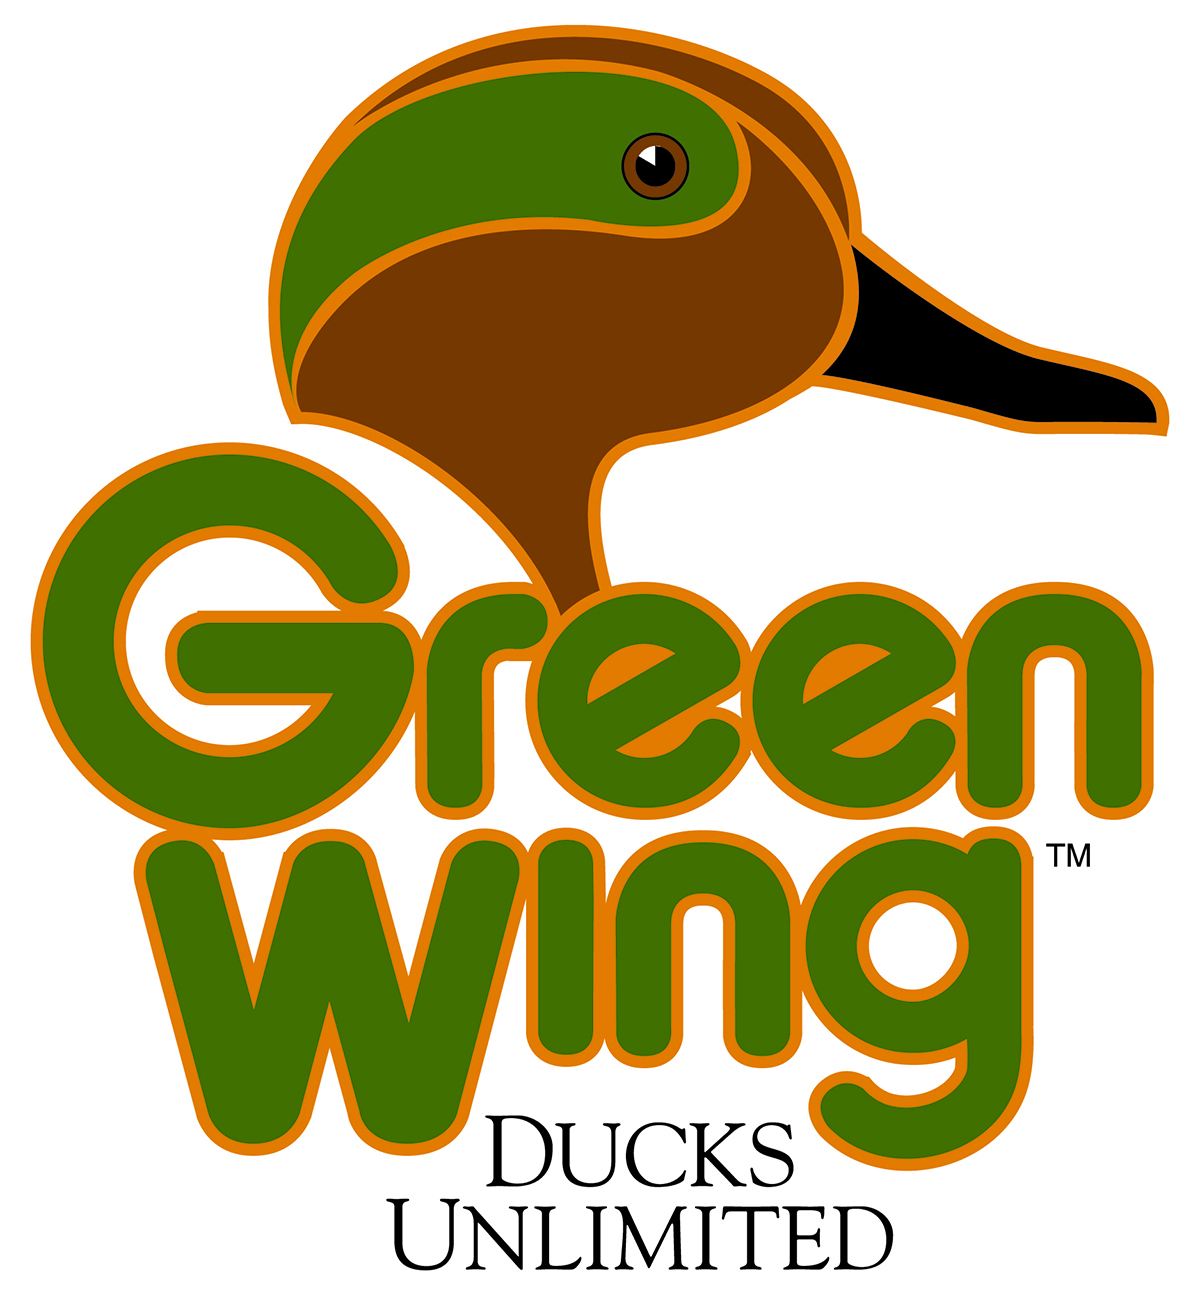 Wyoming's DU Legacy Greenwing Program